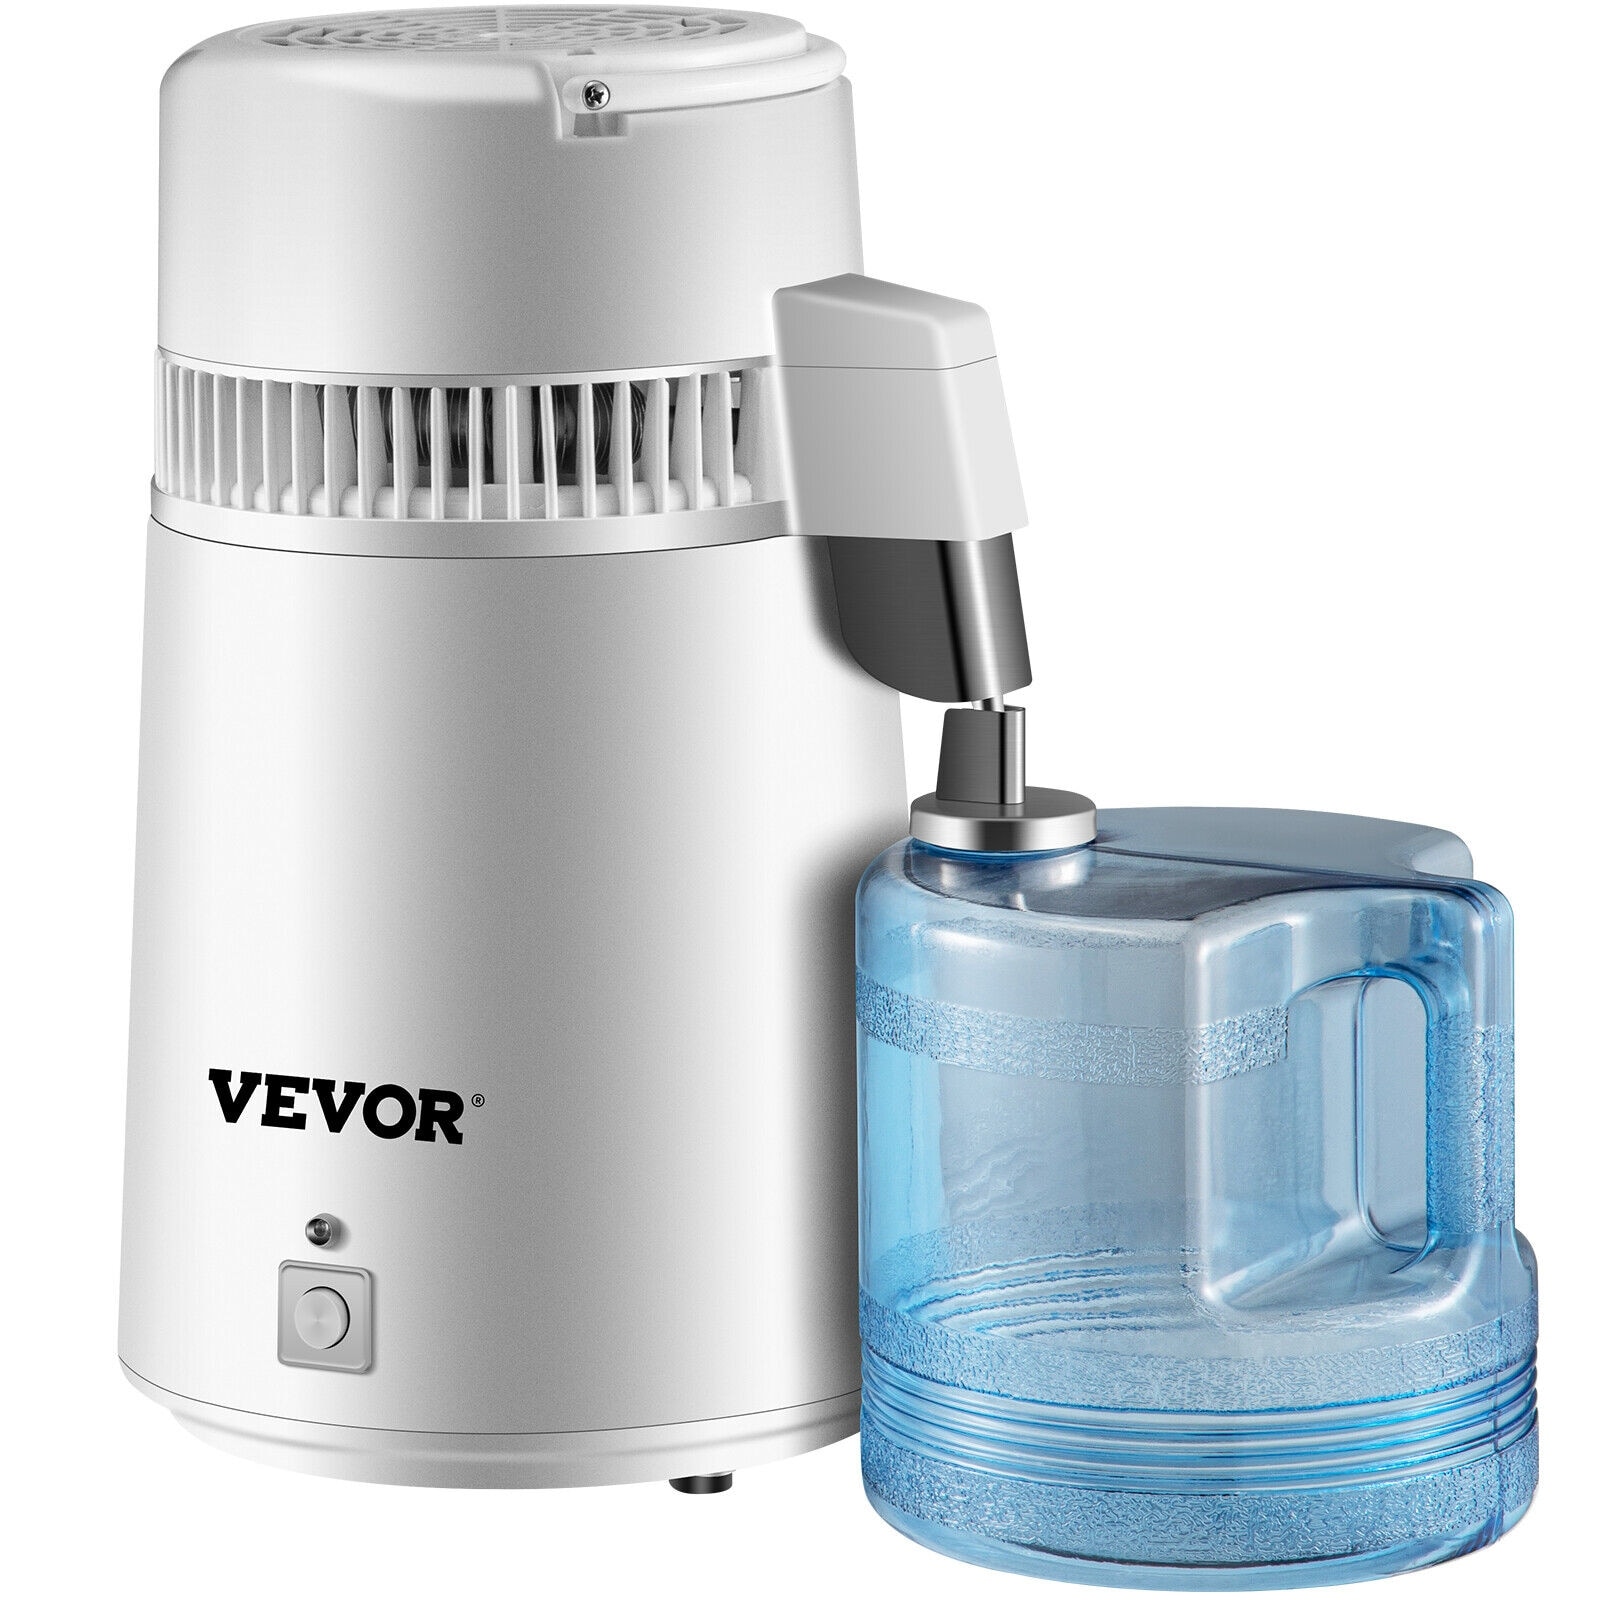 VEVOR Water Distiller 750 Watt Purifier Filter 1.1 Gal. Fully